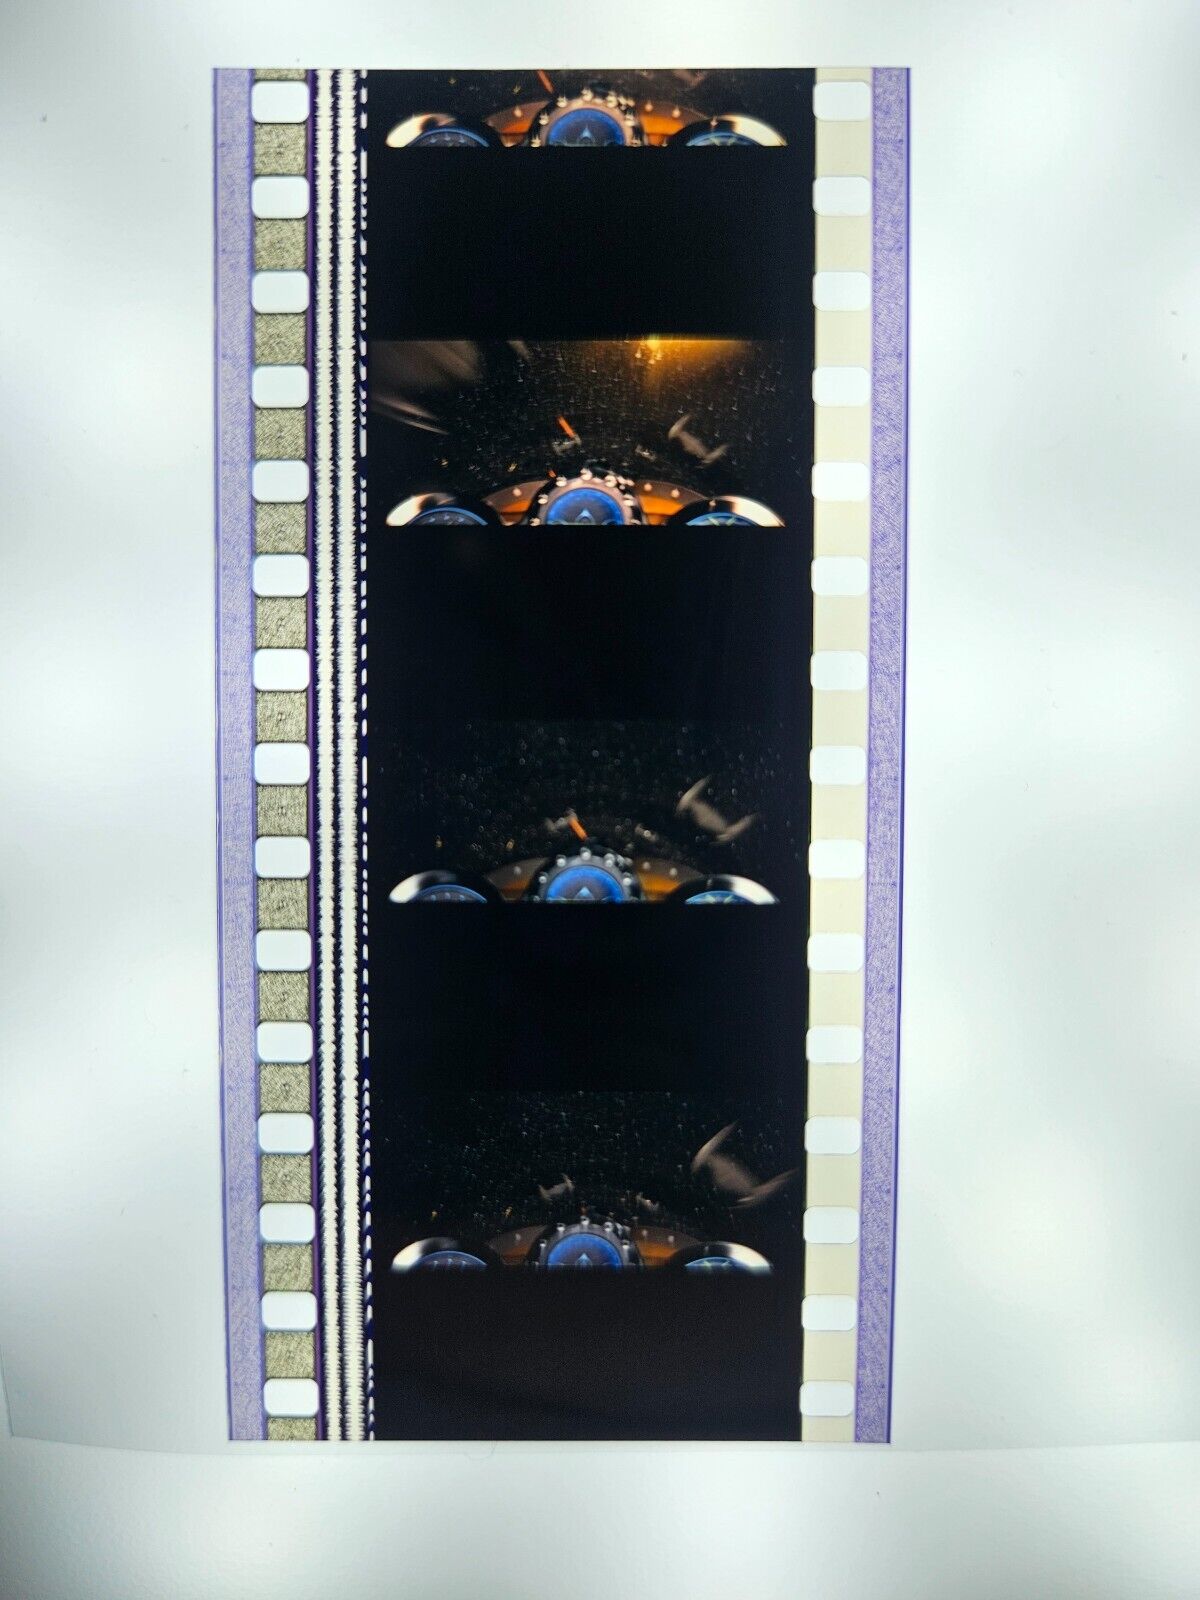 Space Battle Star Wars Episode 1 Phantom Menace 35mm Original Film Cells SW2092 Star Wars 35mm Film Cell - Hobby Gems